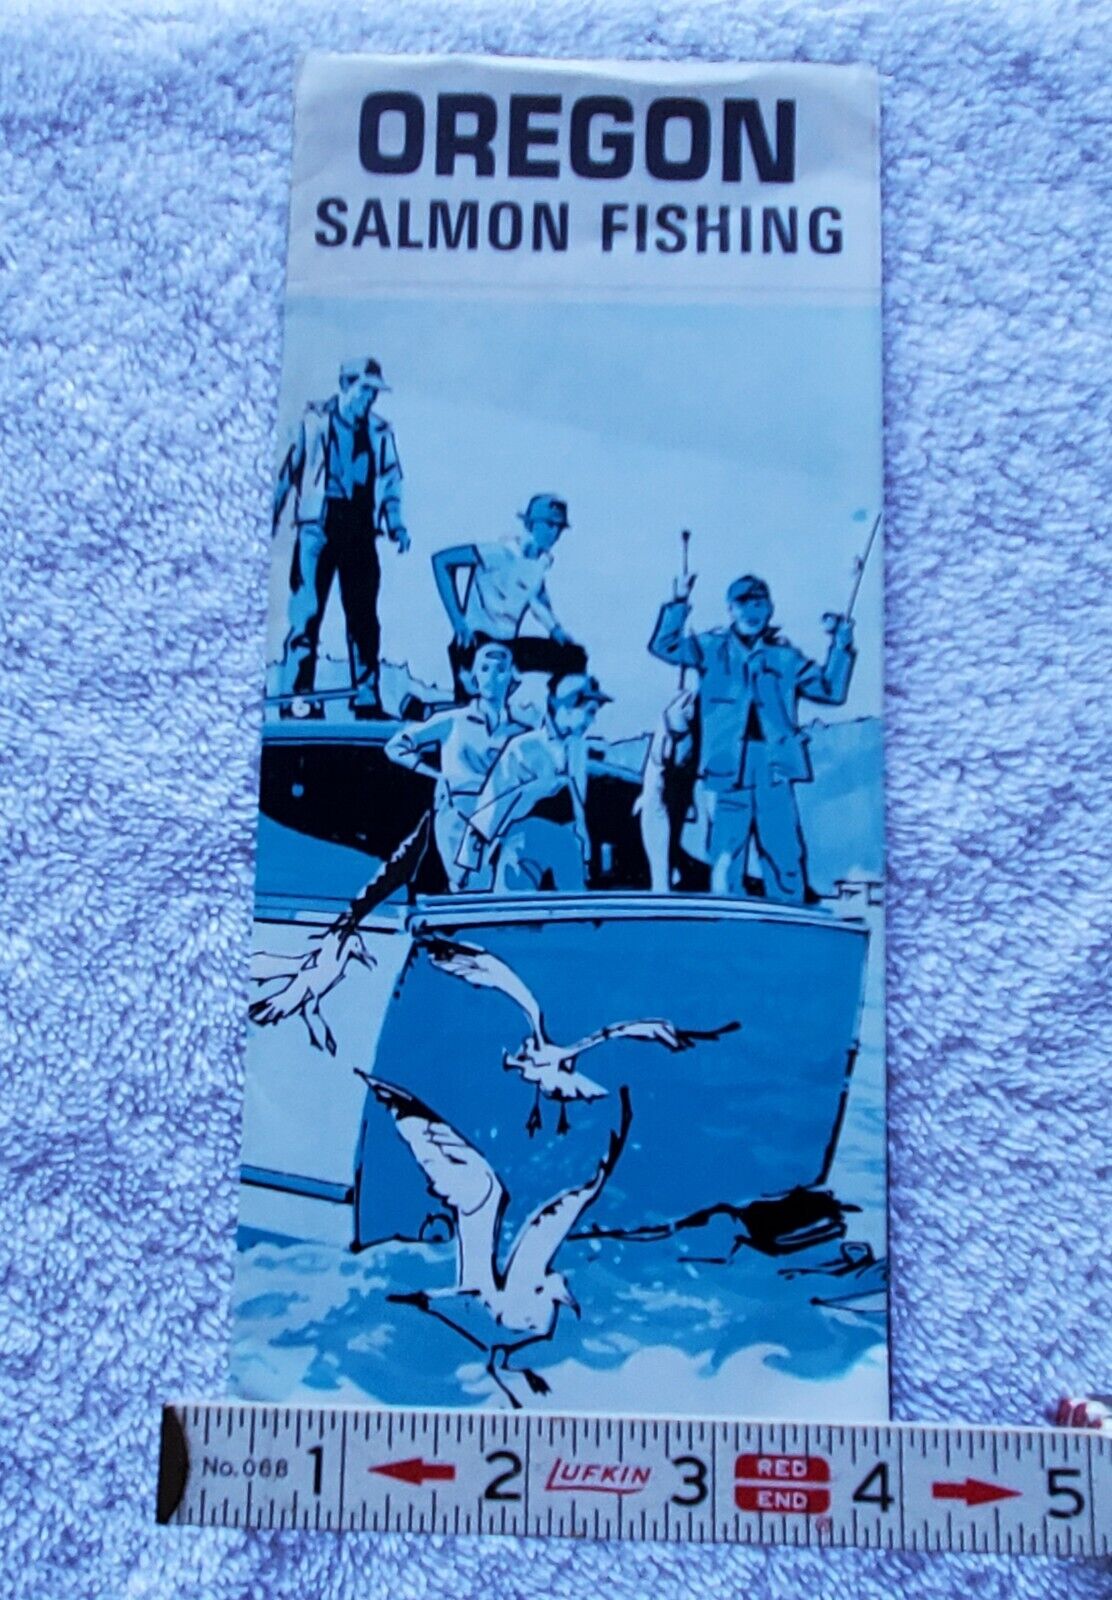 BROCHURE ADVERTISING OREGON SALMON FISHING WITH MAP: CIRCA: -50-60